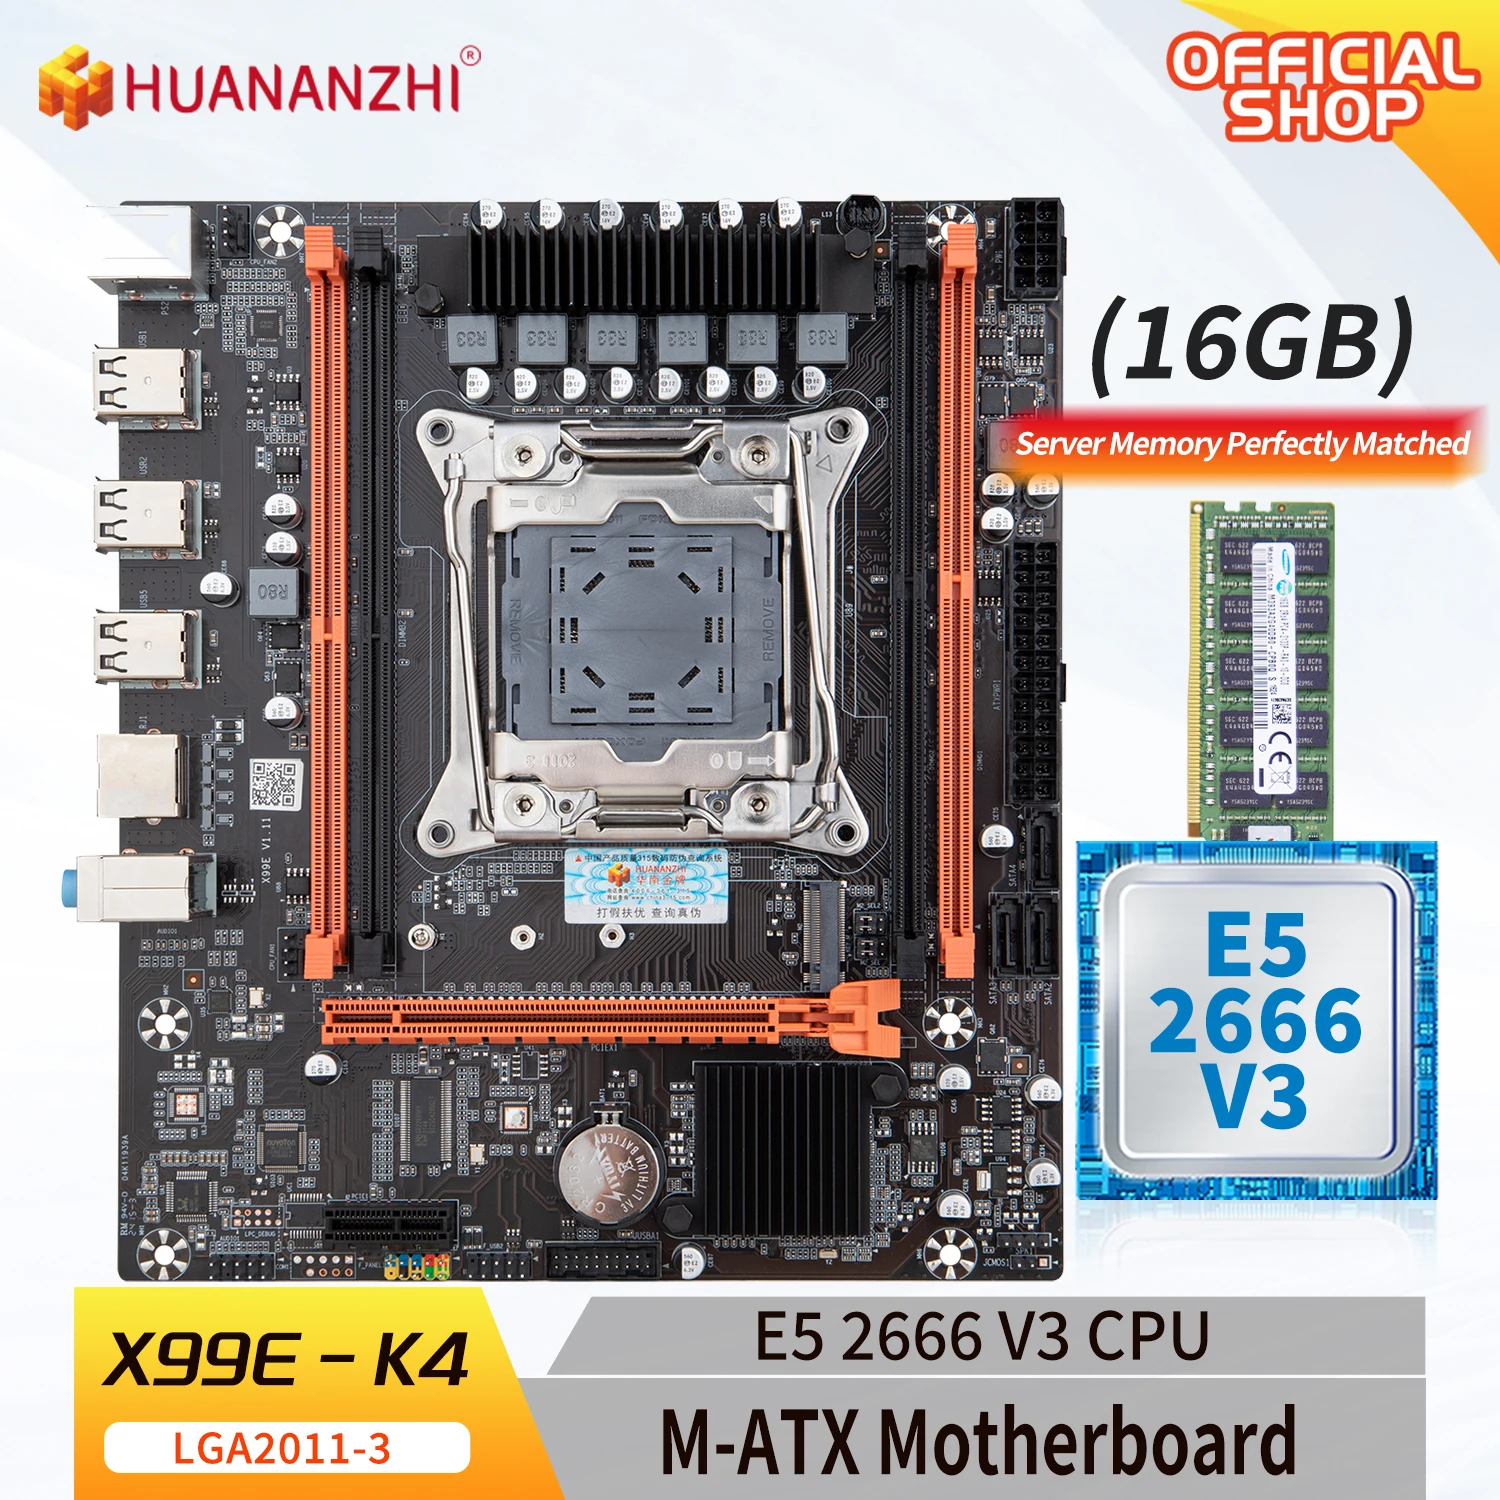 

HUANANZHI X99 E K4 LGA 2011-3 XEON X99 Motherboard with Intel E5 2666 V3 with 1*16G DDR4 ECC memory combo kit set M.2 NVME